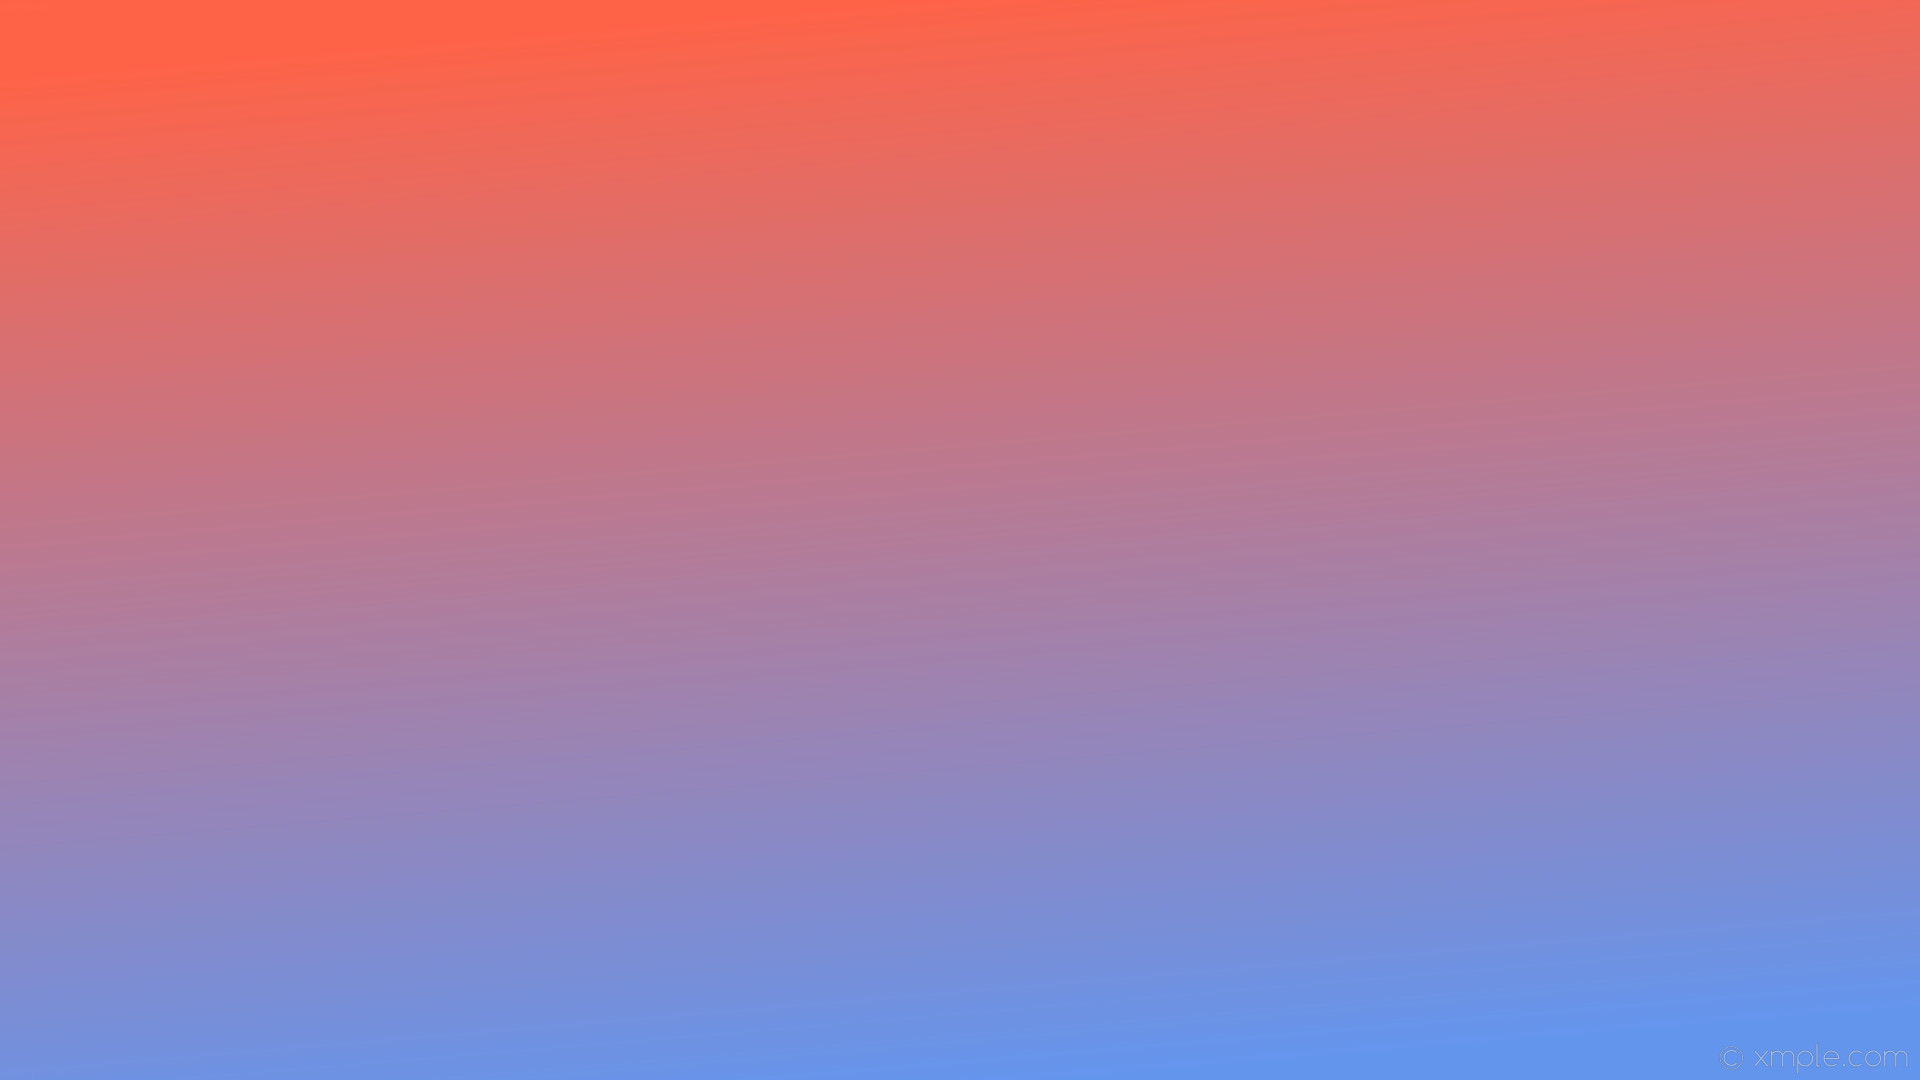 1920x1080 wallpaper linear orange blue gradient cornflower blue tomato #6495ed  #ff6347 285Â°